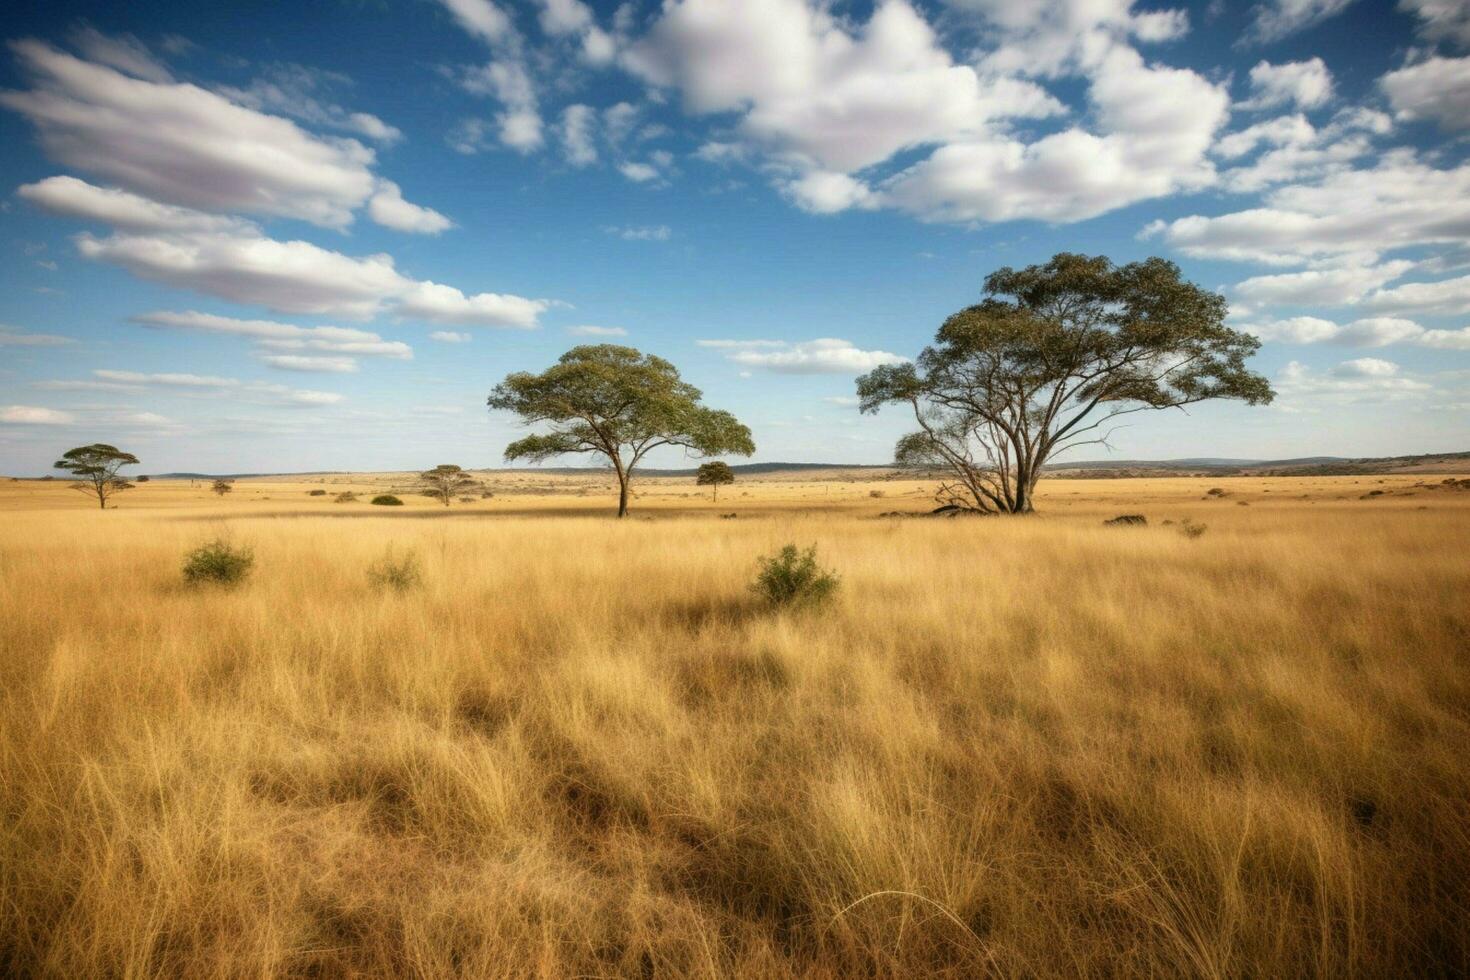 The savanna grasslands stretching for miles photo